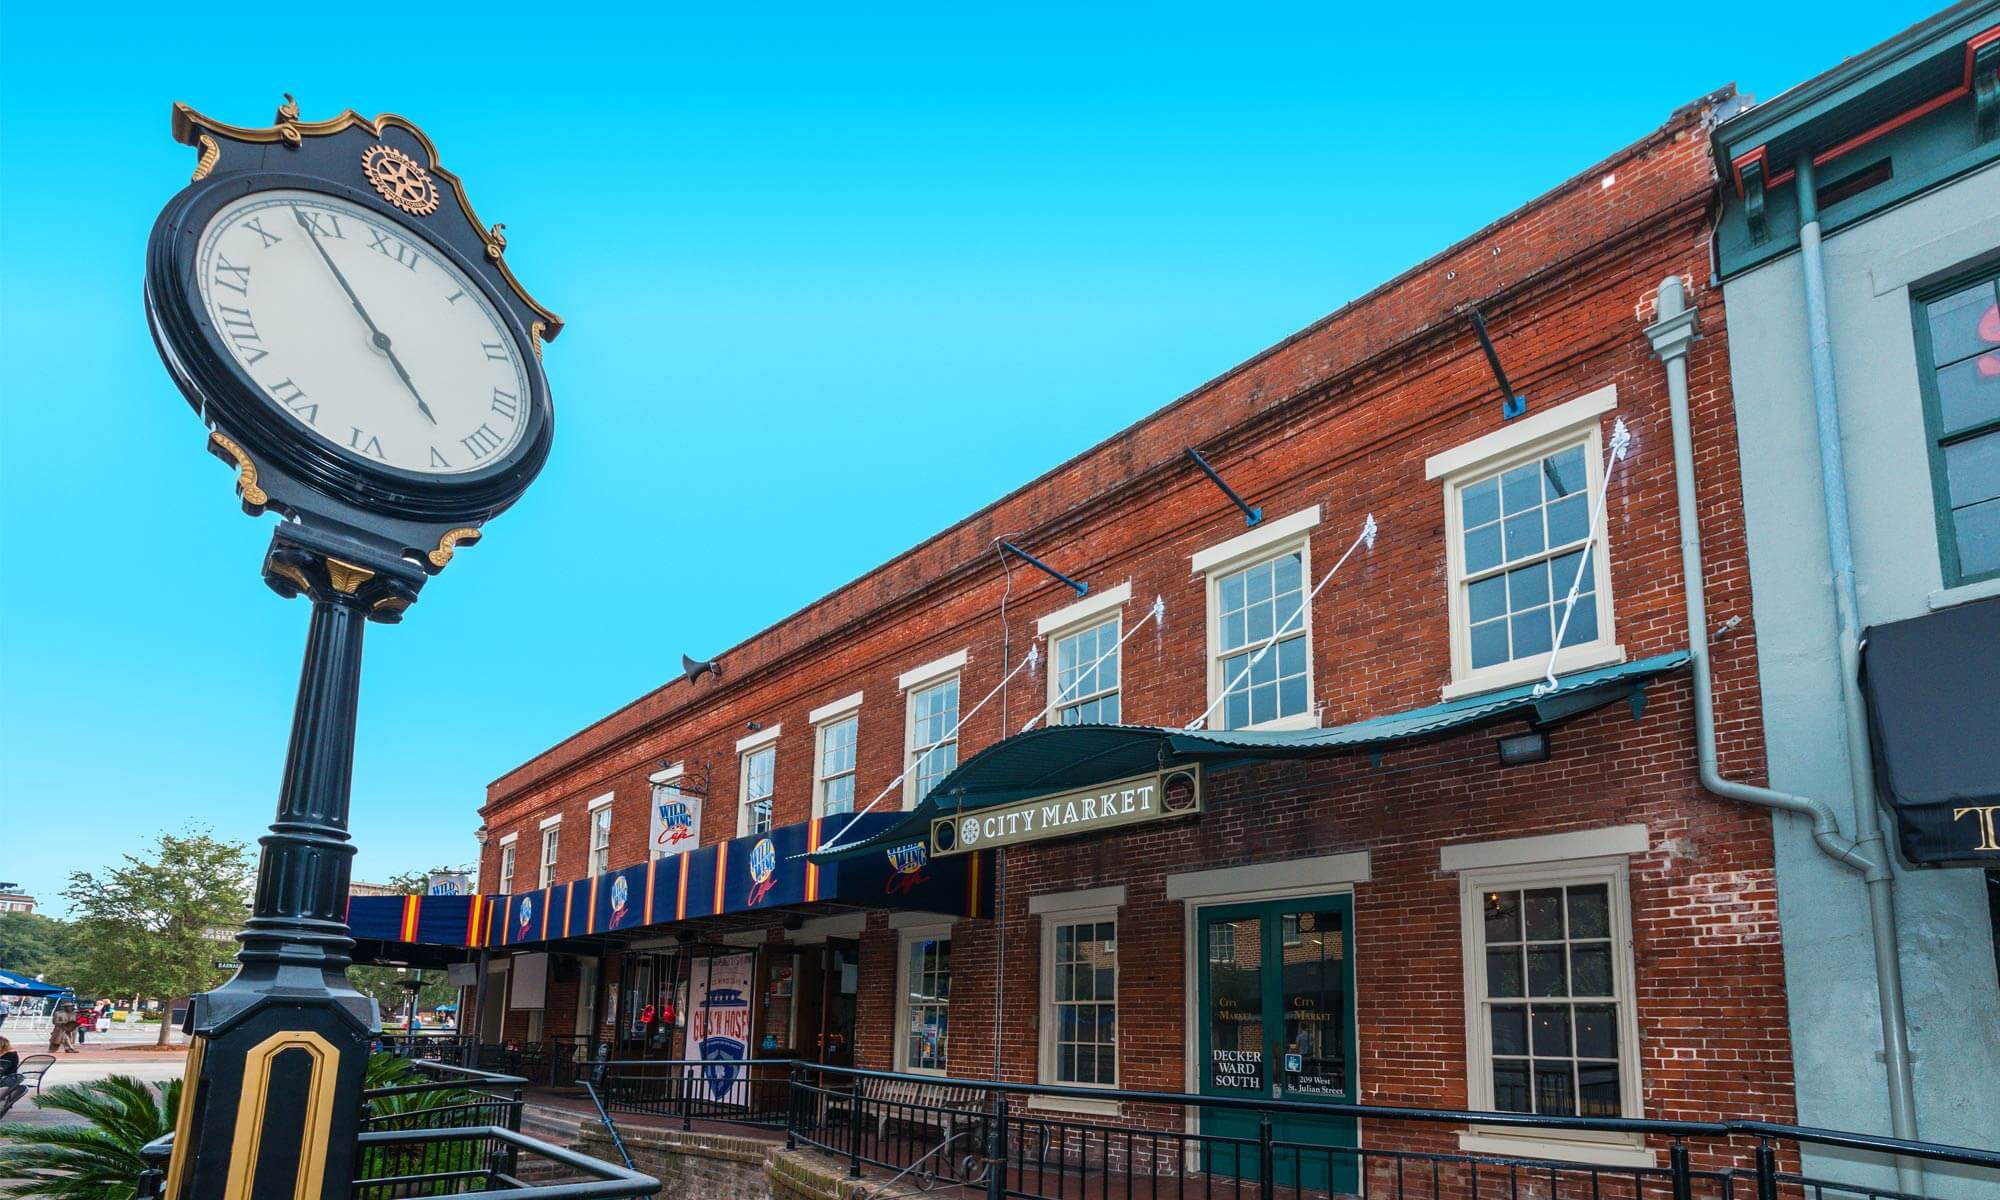 An old clock adjacent to City Market in Savannah, GA